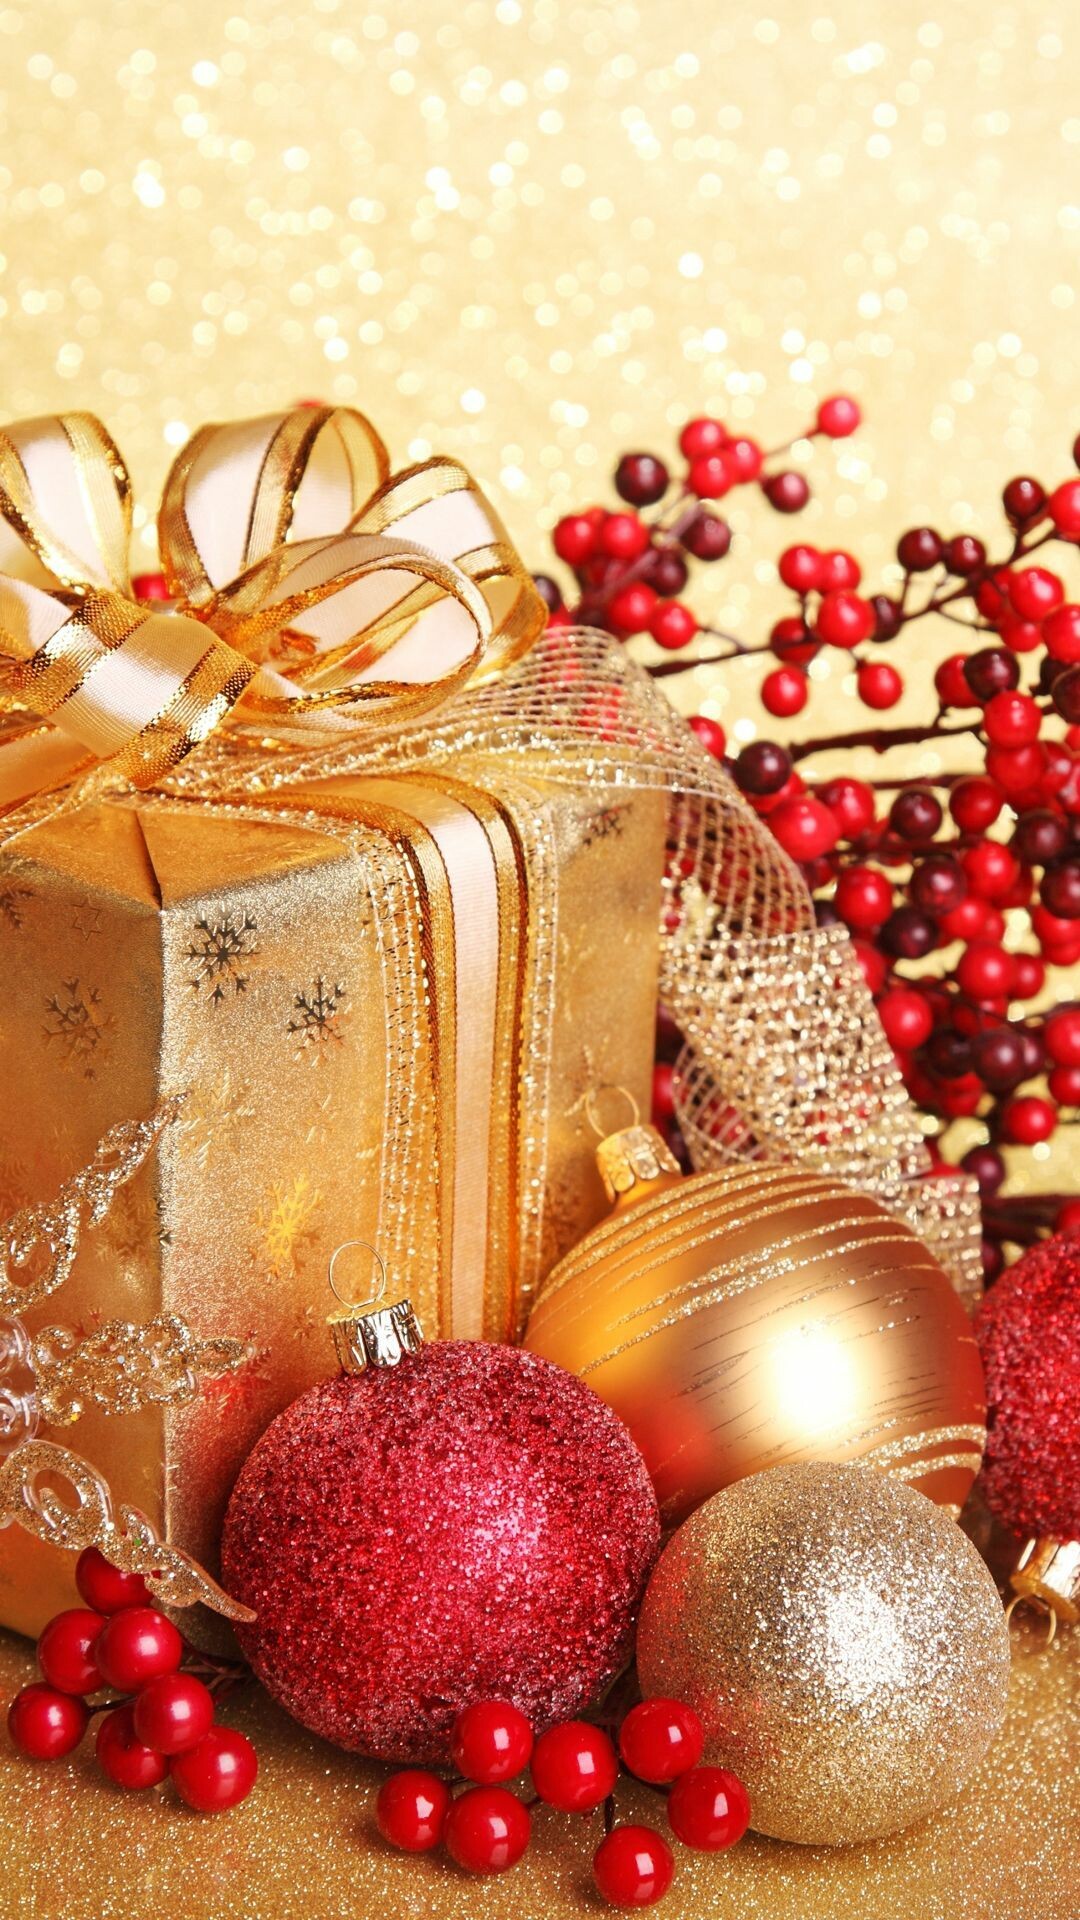 Christmas: Glitter, Xmas presents, Holly. 1080x1920 Full HD Wallpaper.